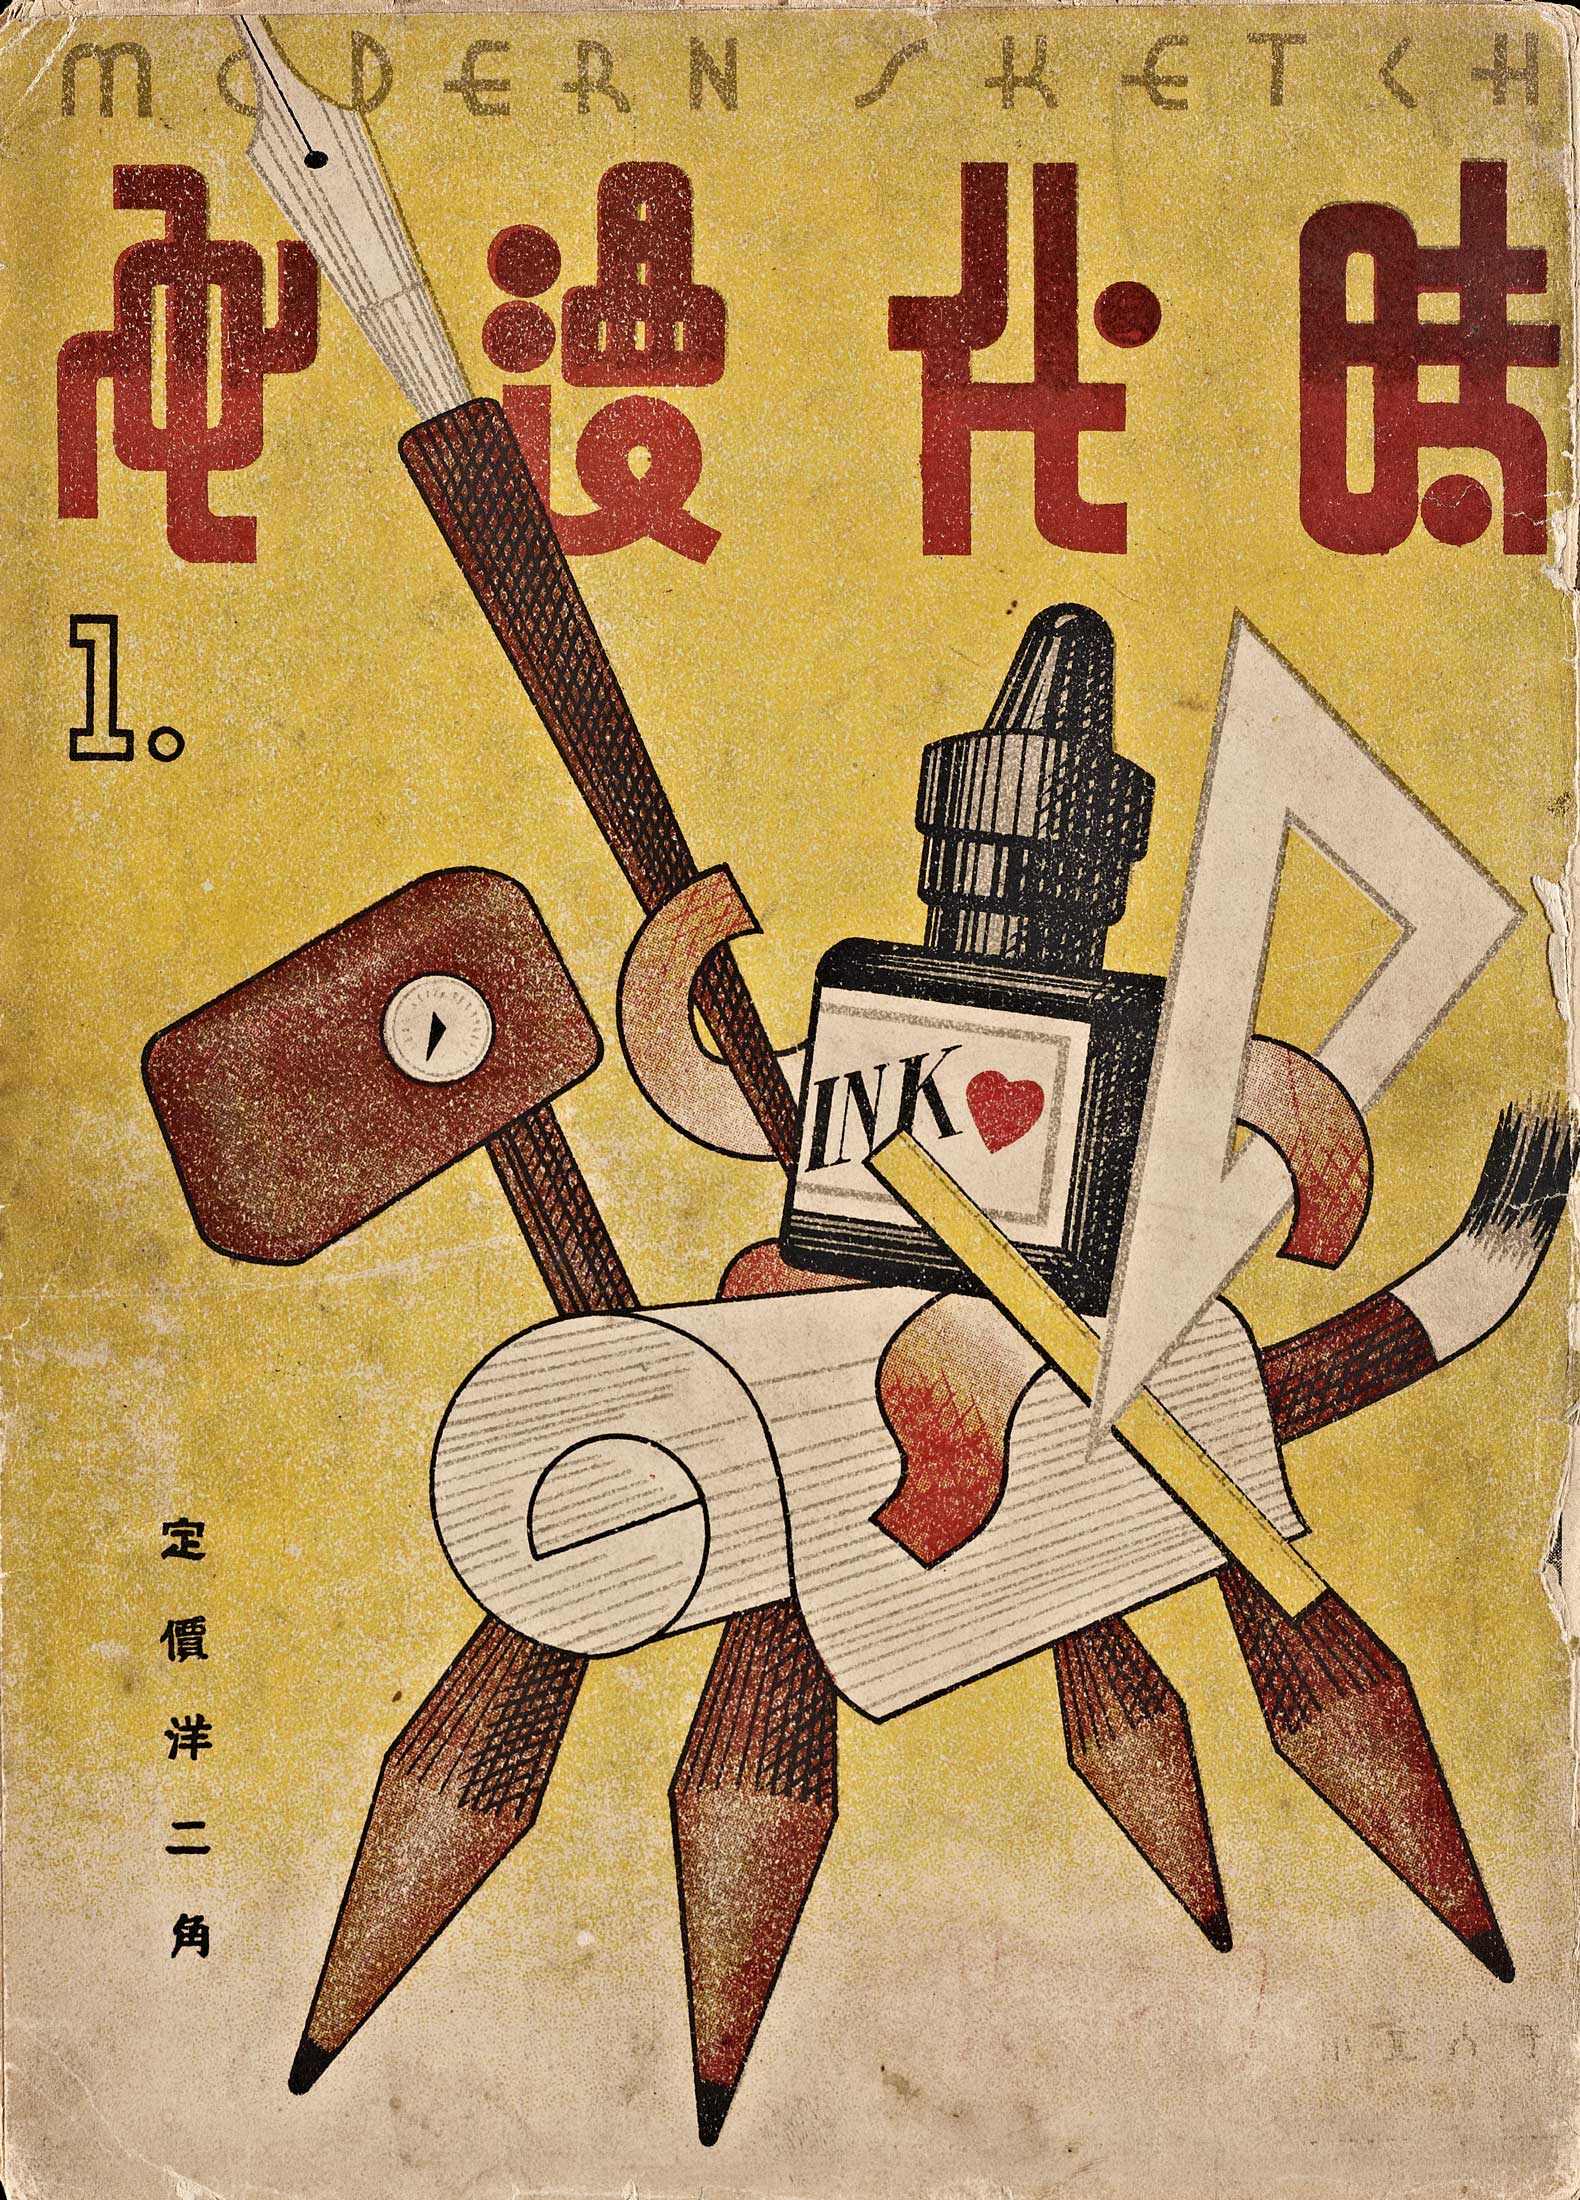 Cover of Modern Sketch (April 1934)